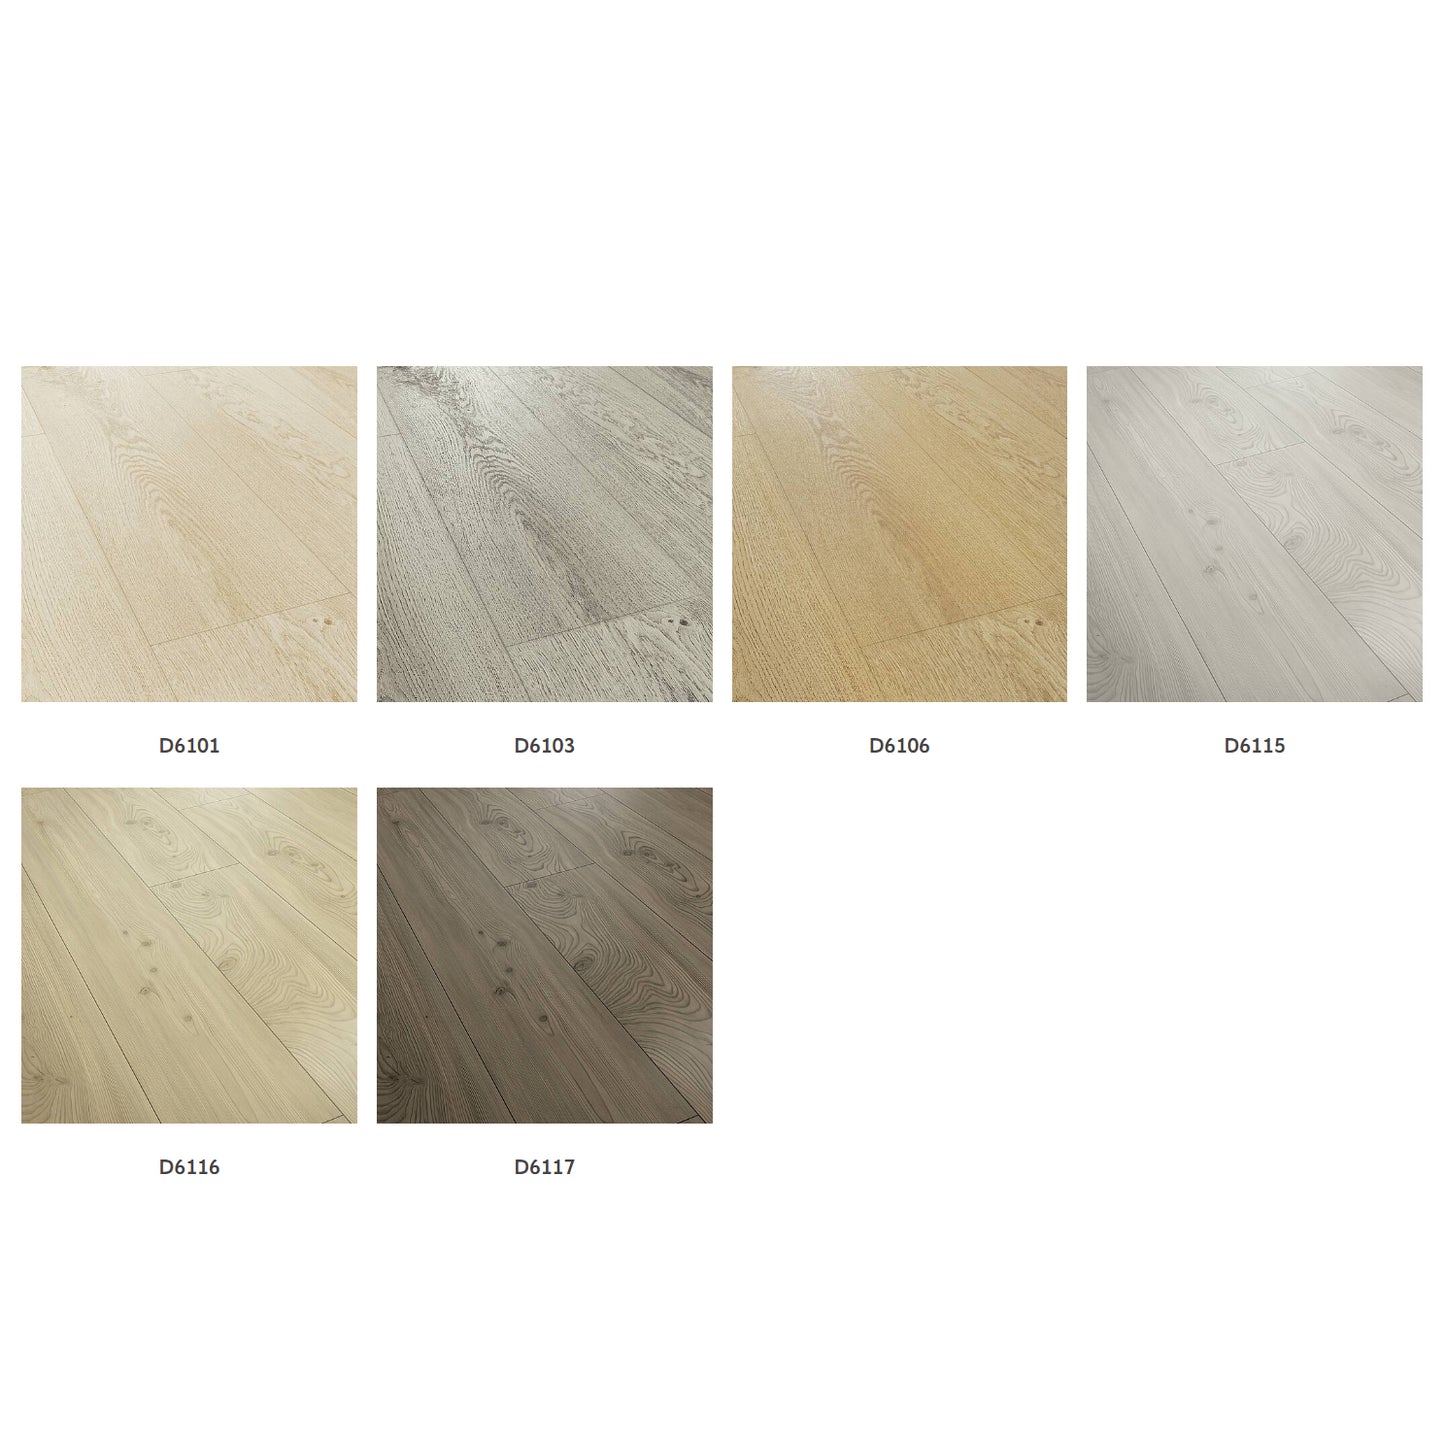 SWISS | LBERTY SYNC 超耐磨木地板